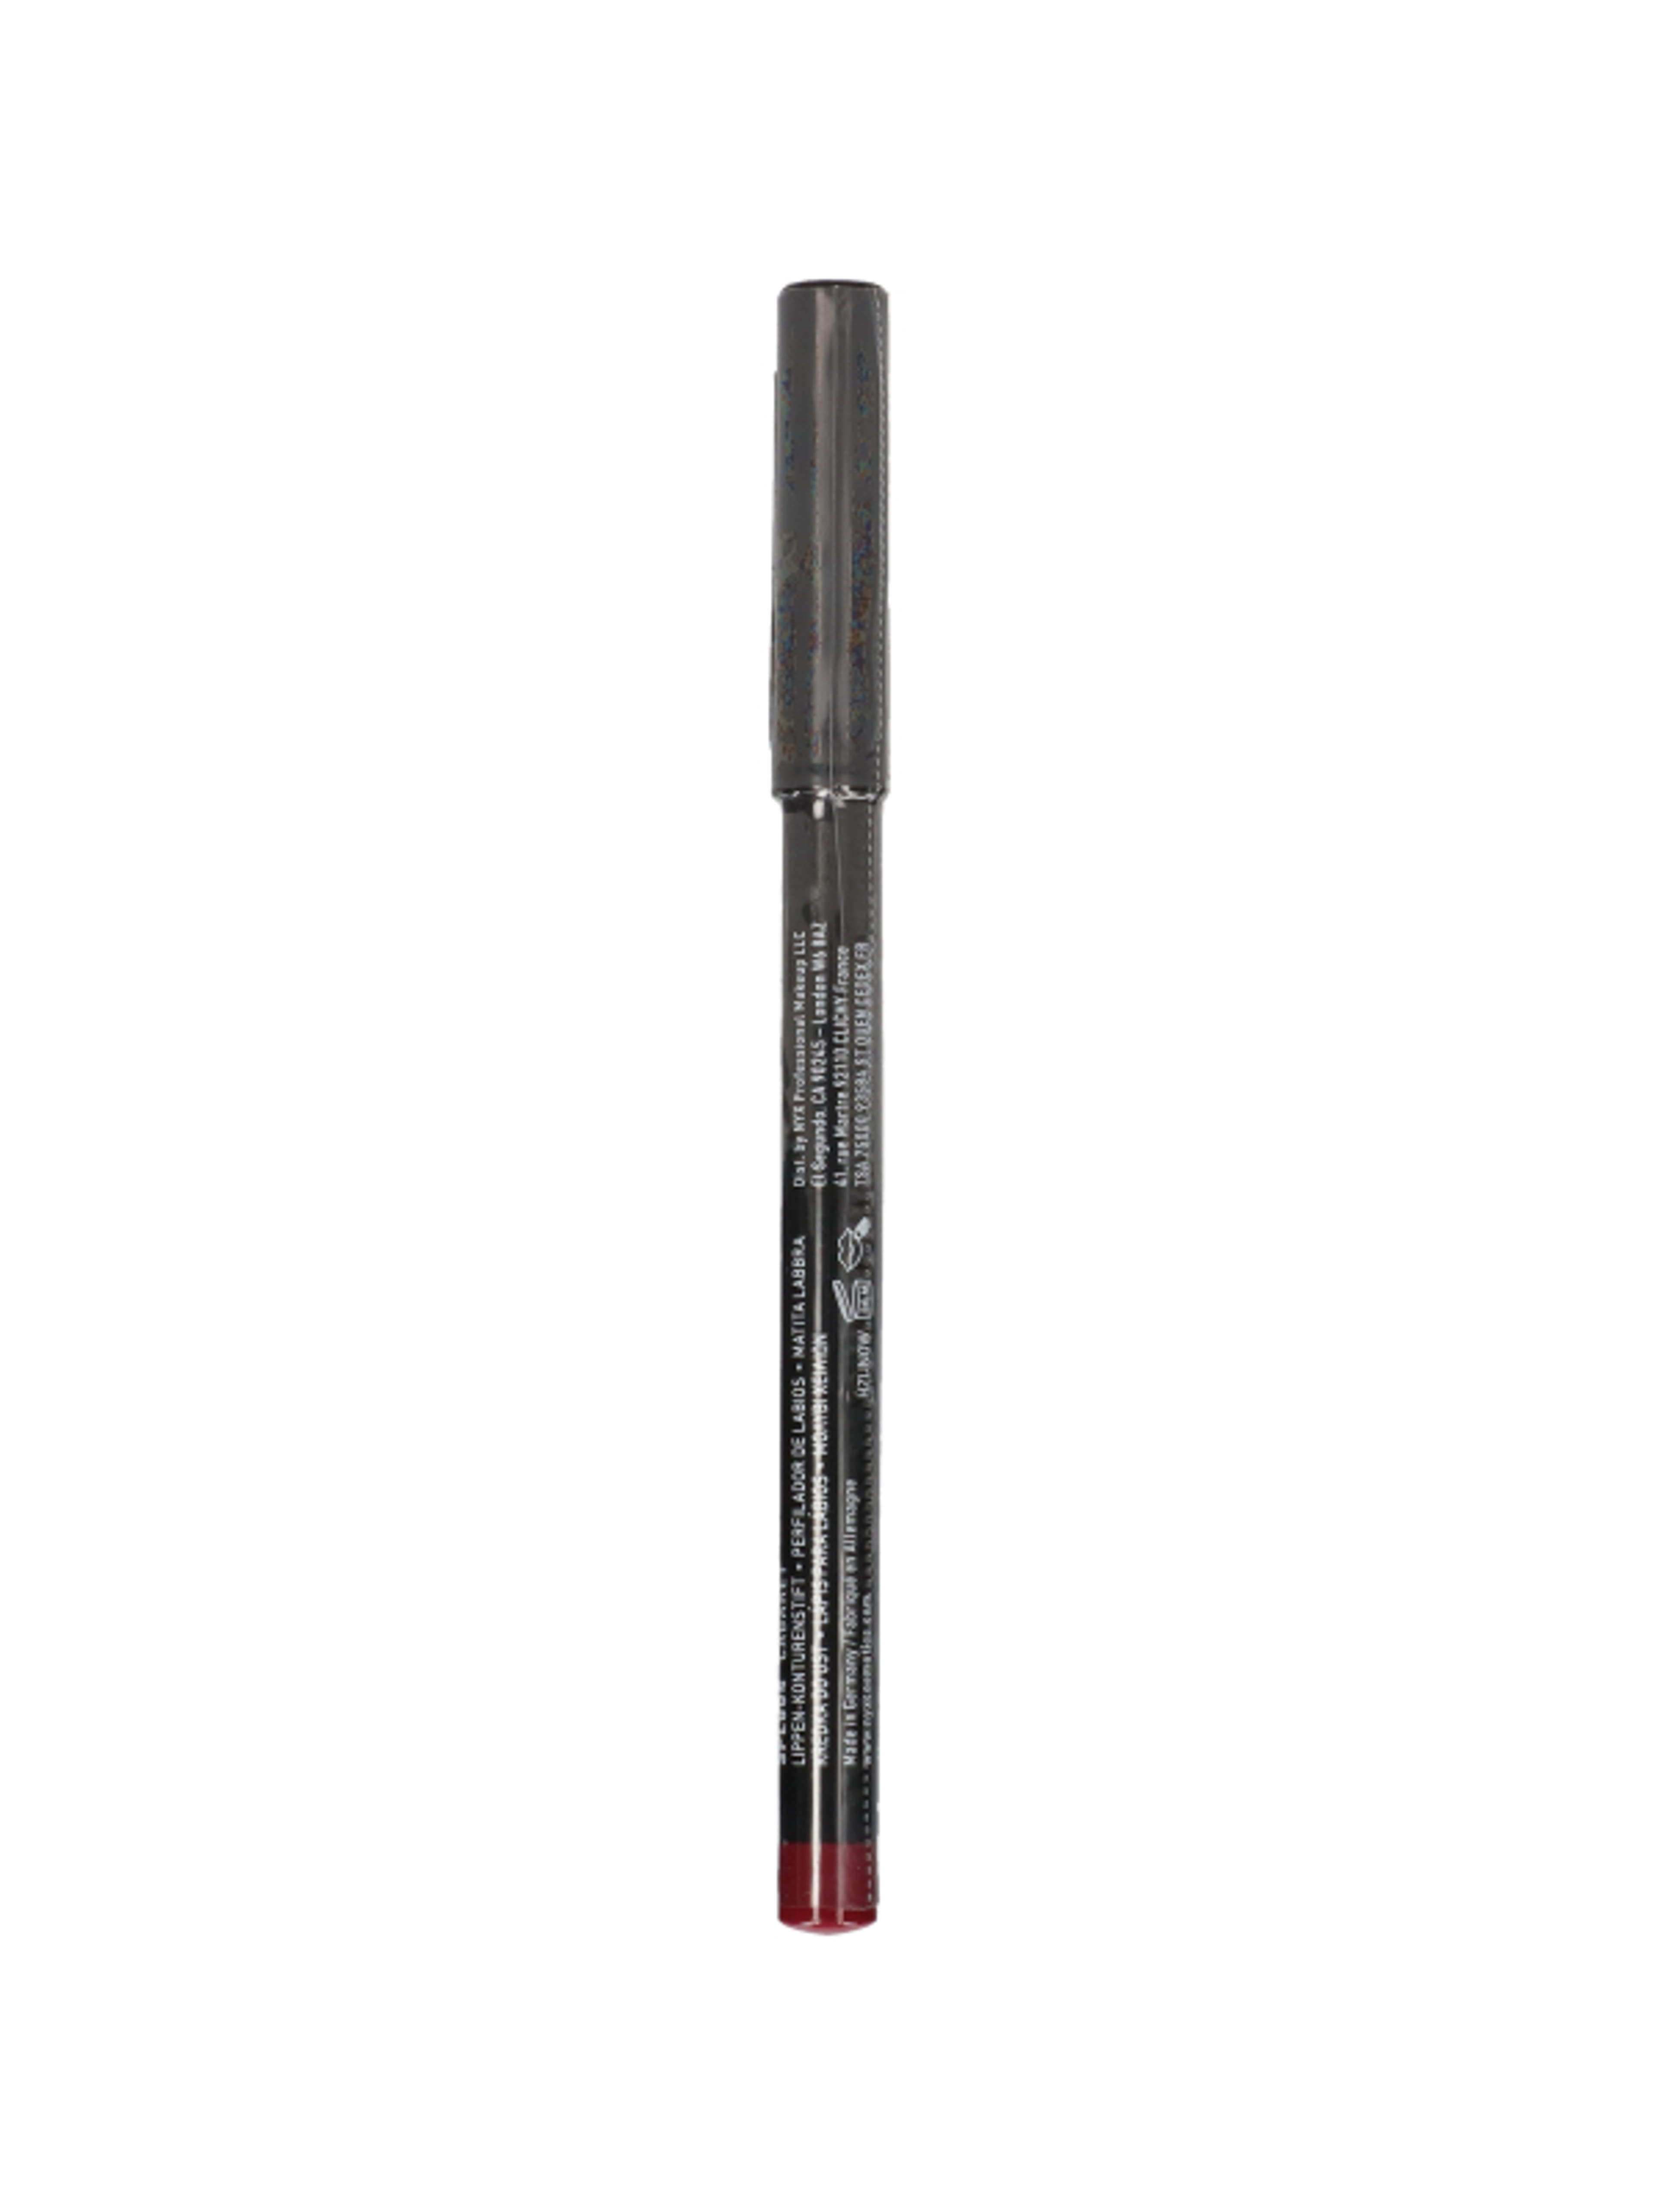 NYX Professional Makeup Slim Lip Pencil ajakkontúr ceruza, Cabaret - 1 db-6